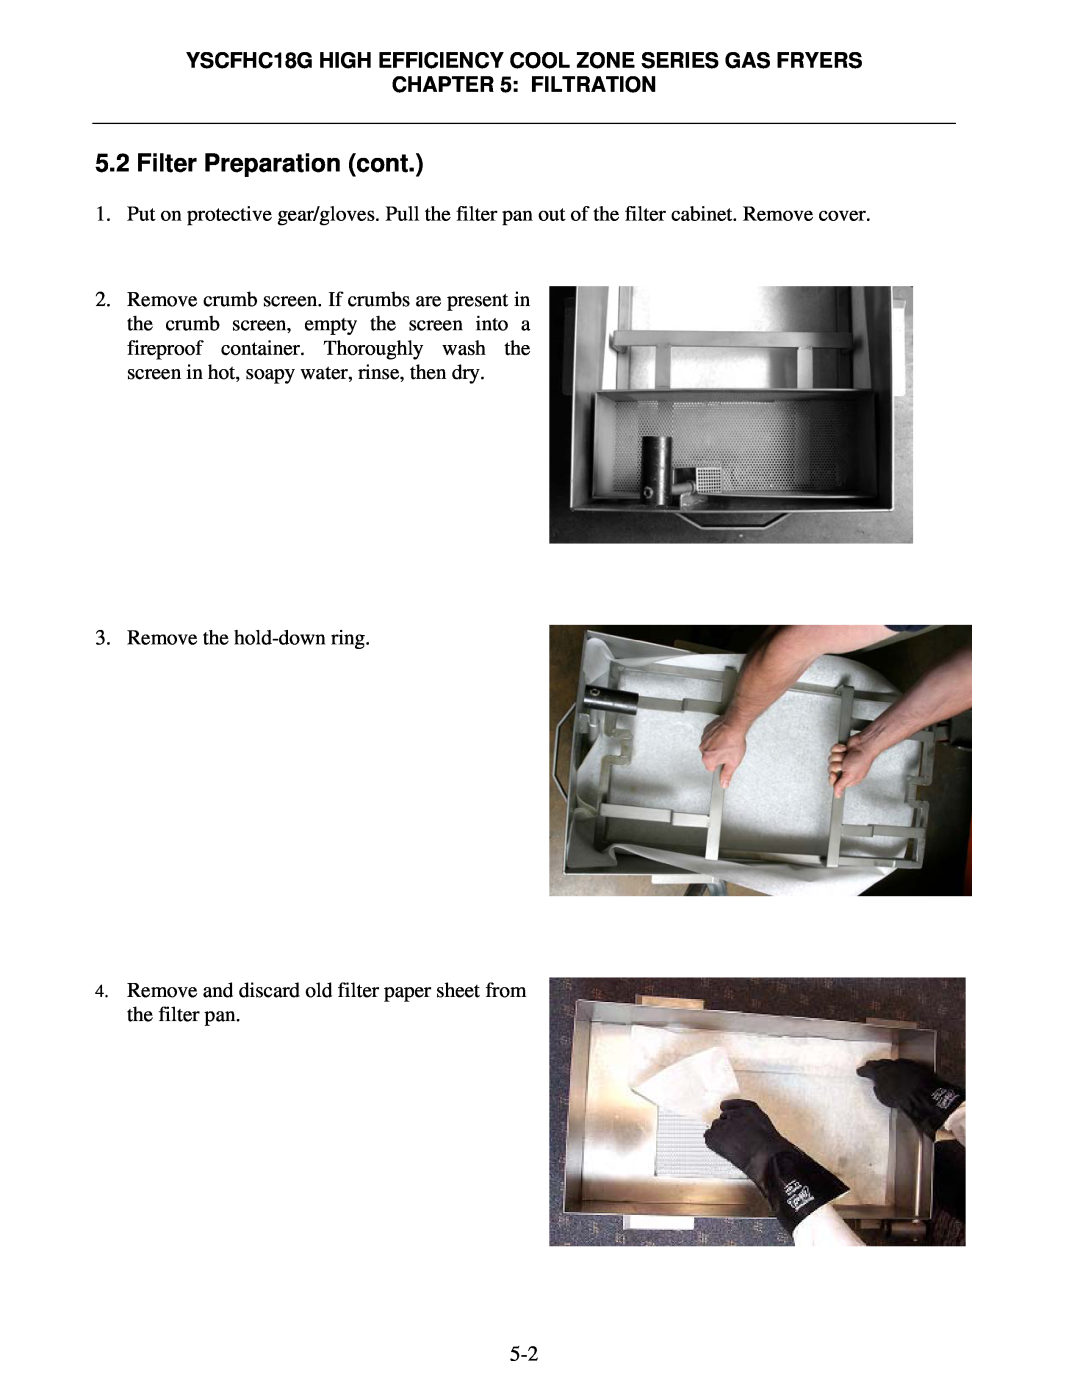 Frymaster *8196329* manual Filter Preparation cont, Filtration 